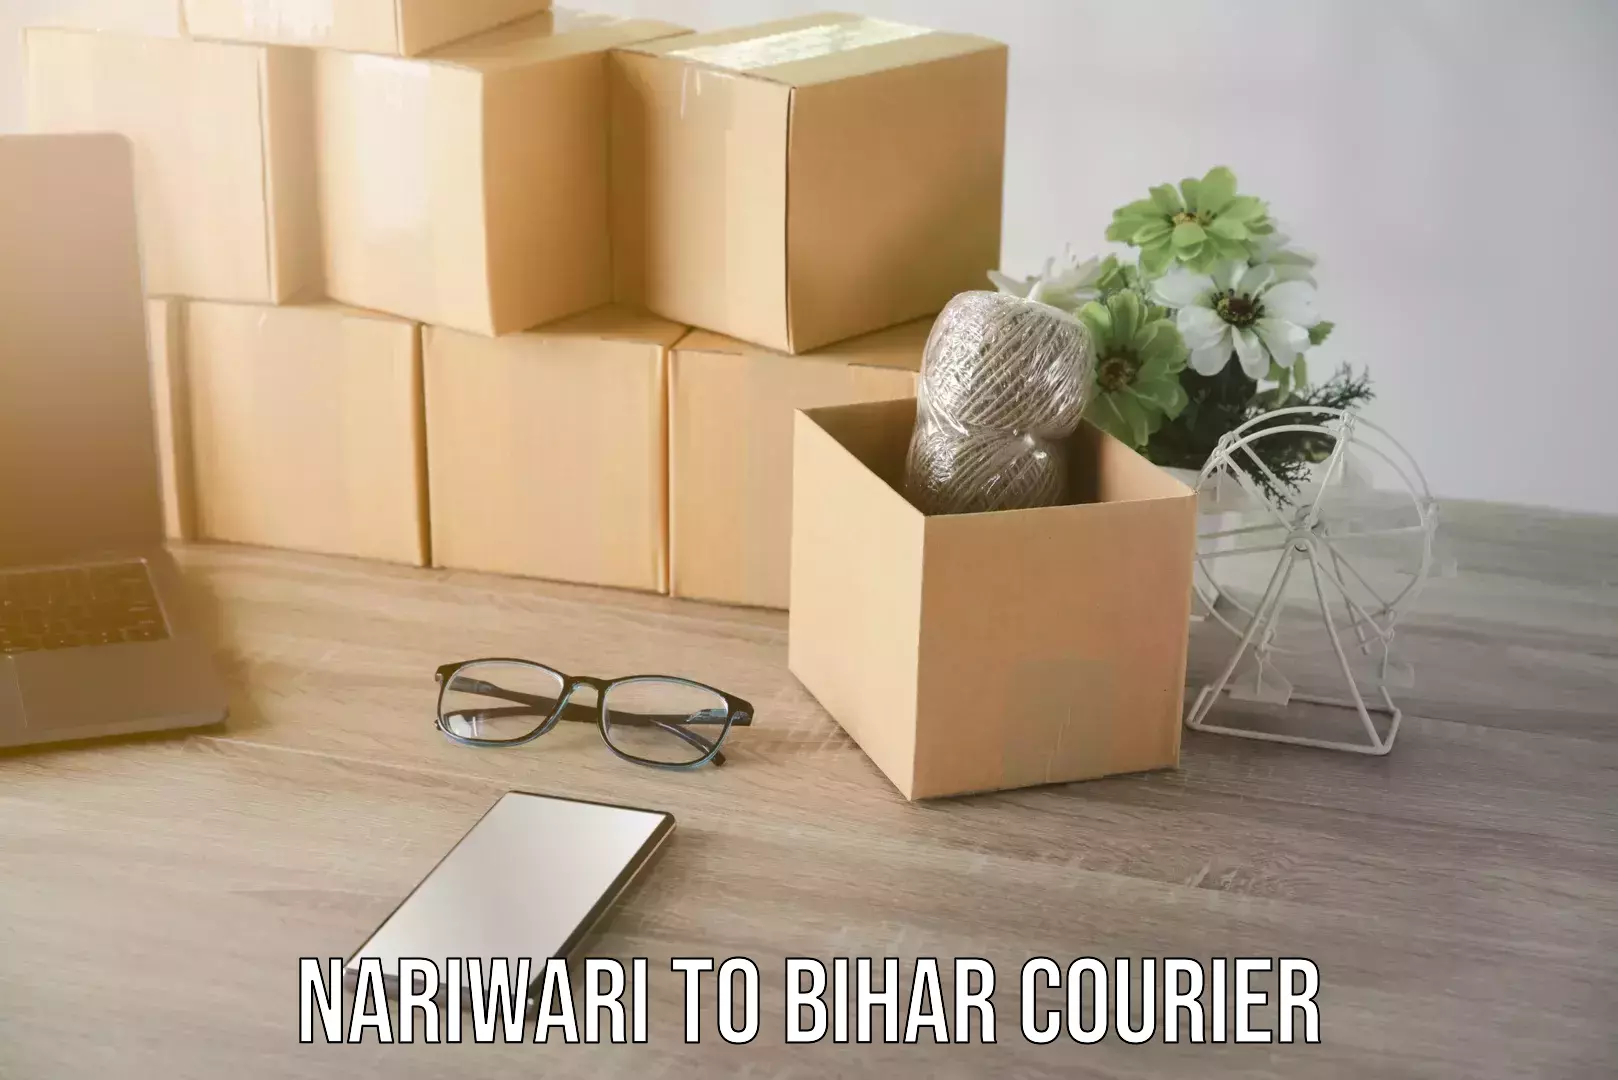 Furniture delivery service Nariwari to Bihar